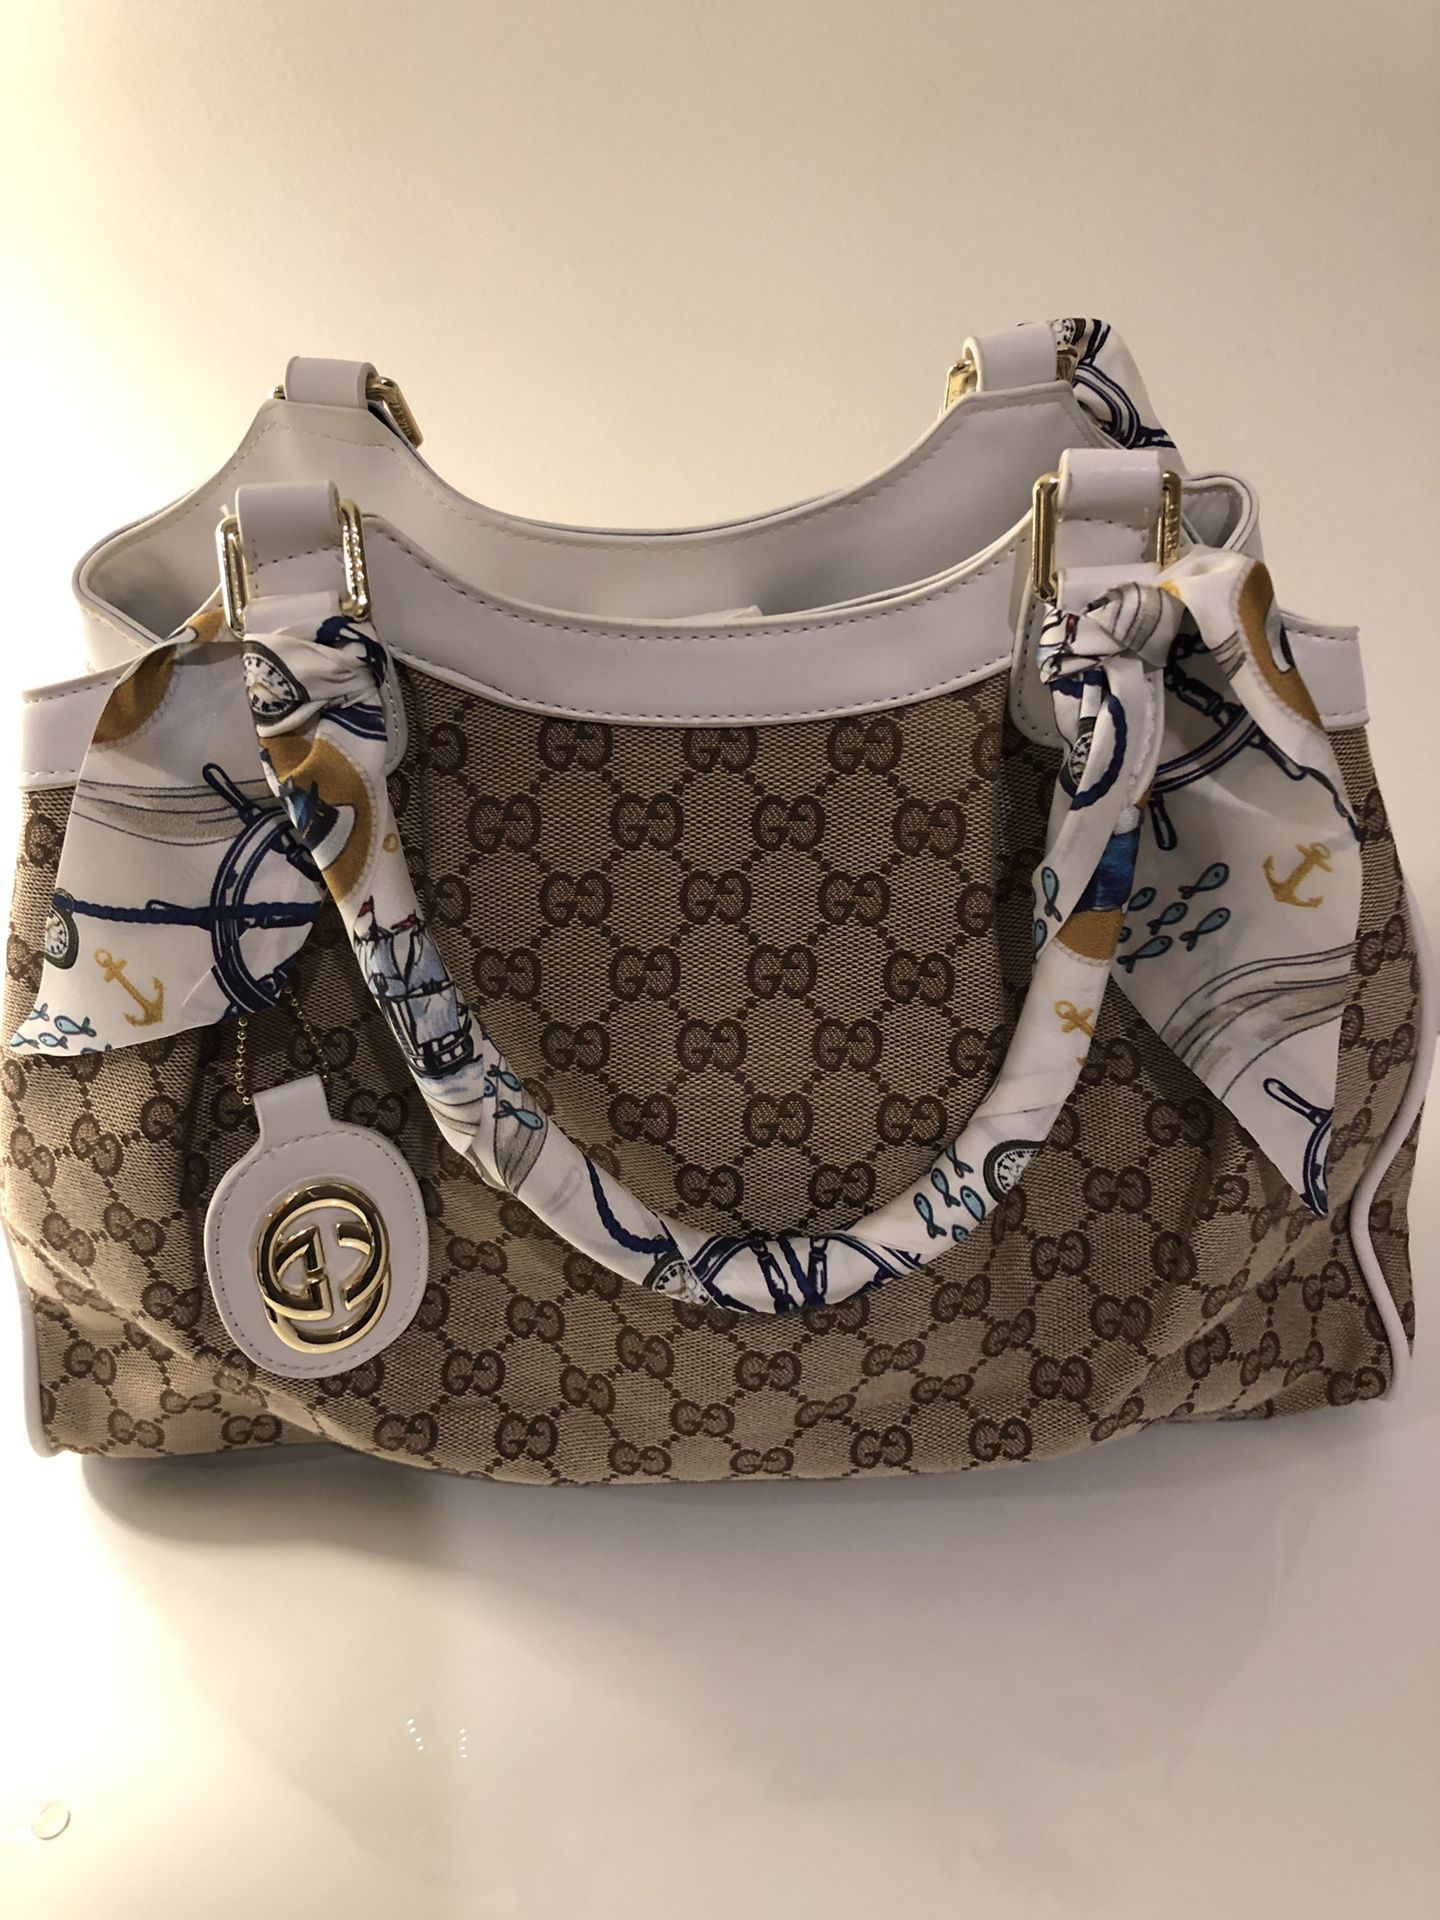 Gucci-style handbag